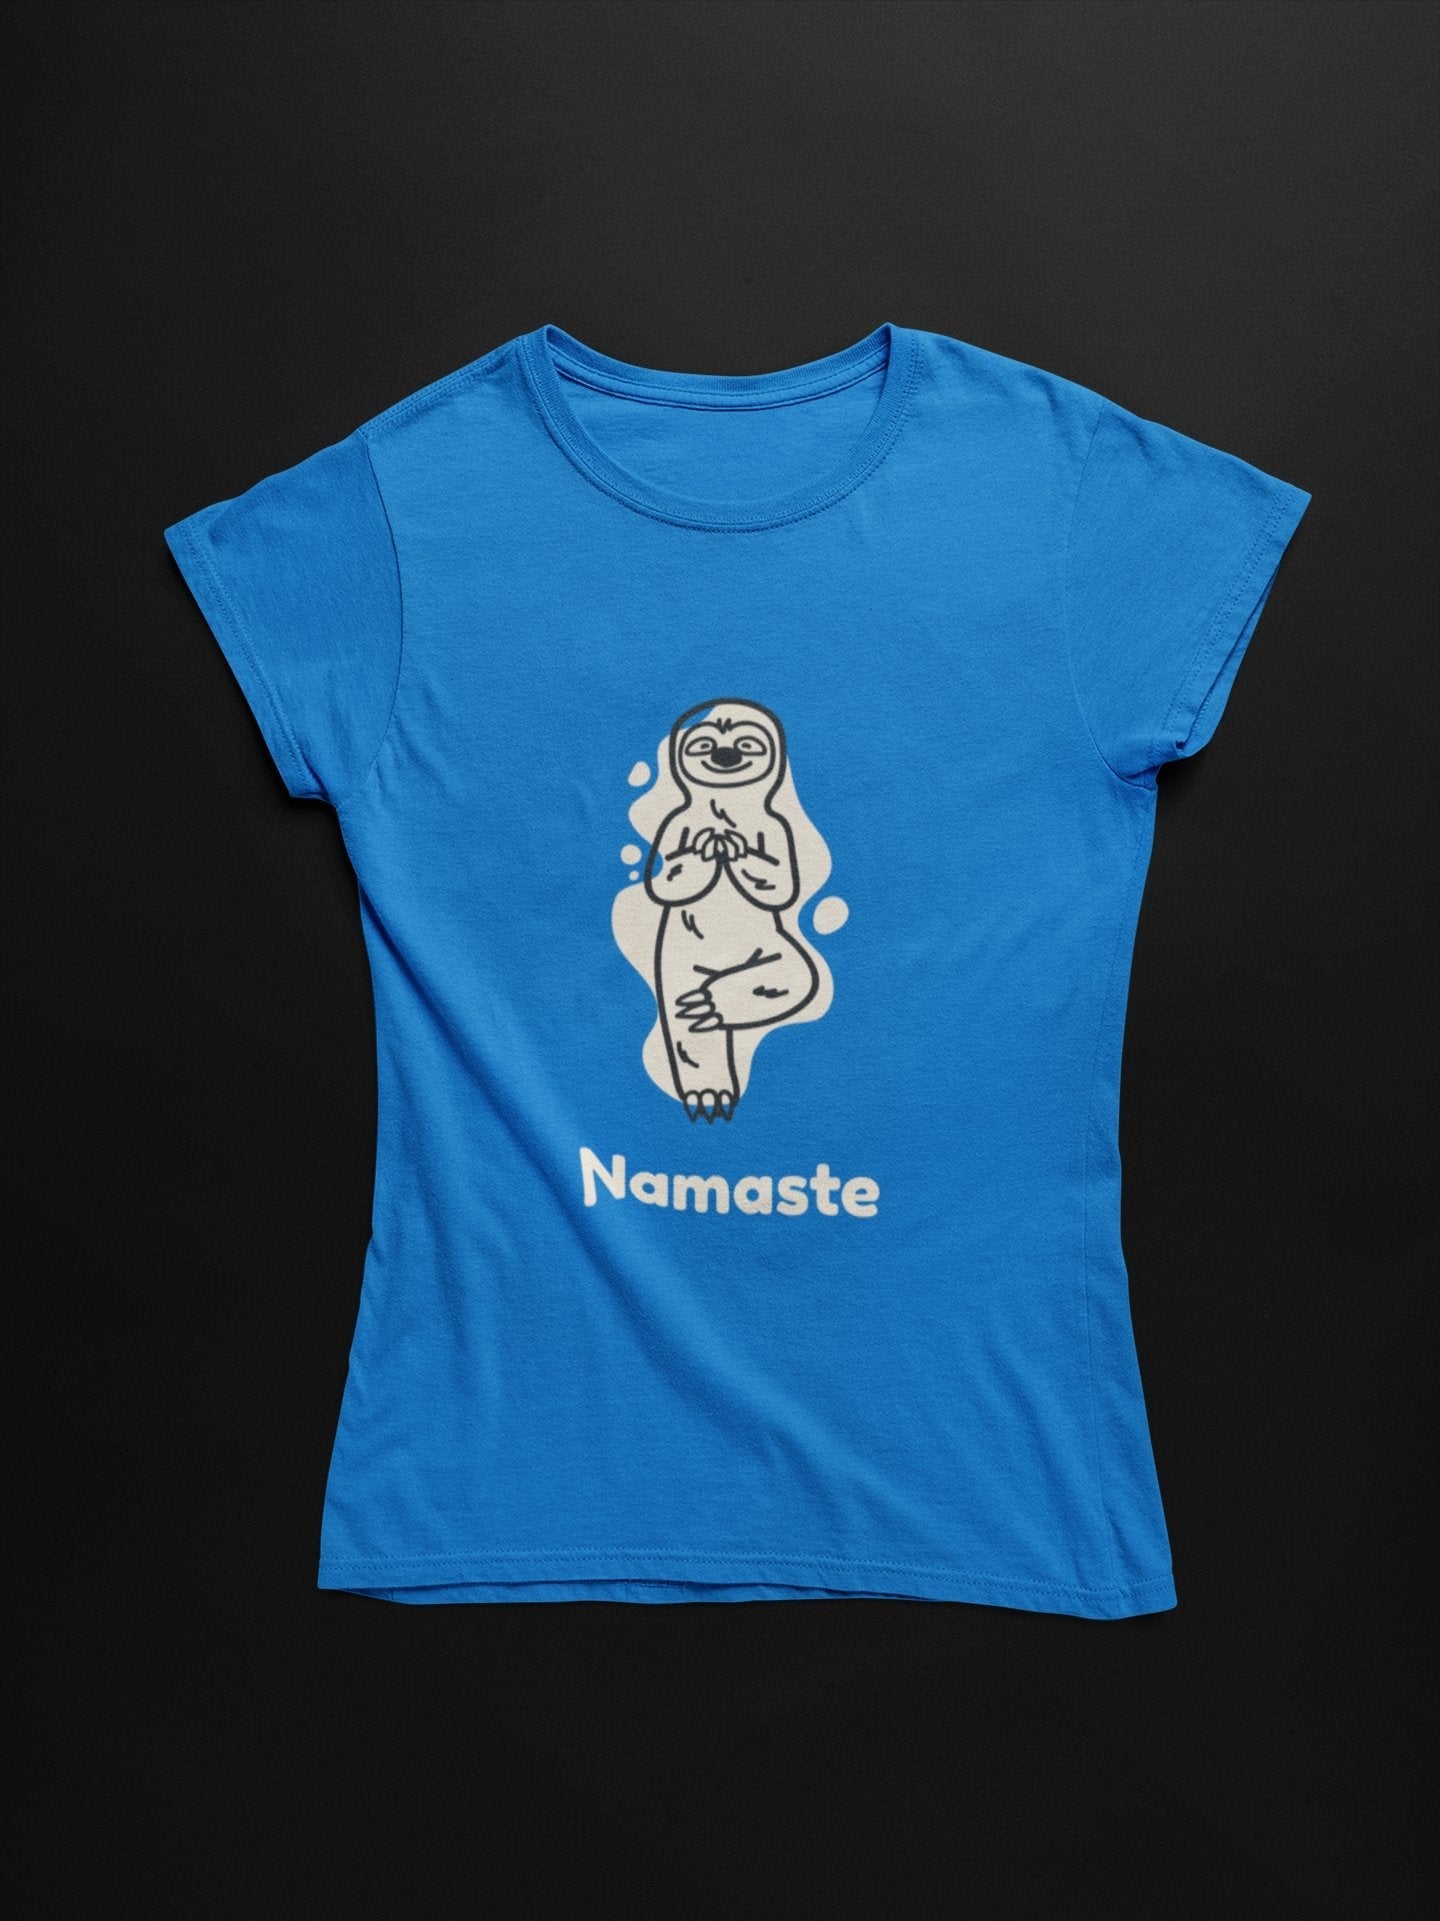 thelegalgang,Sloth Namaste pose Design Yoga T shirt for Women,WOMEN.